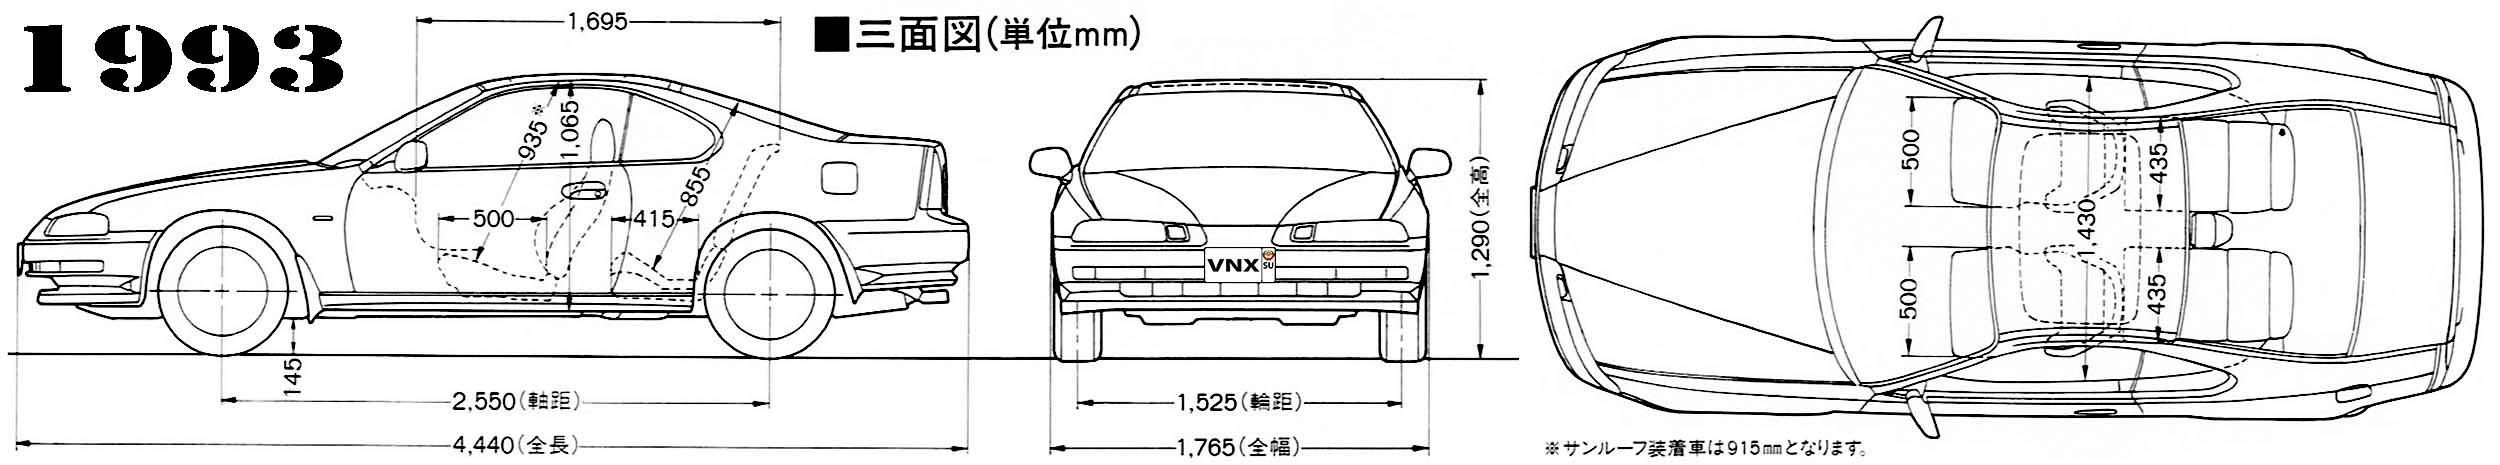 Габаритные размеры Хонда Прелюд 1991-1996 (dimensions Honda Prelude mk4)